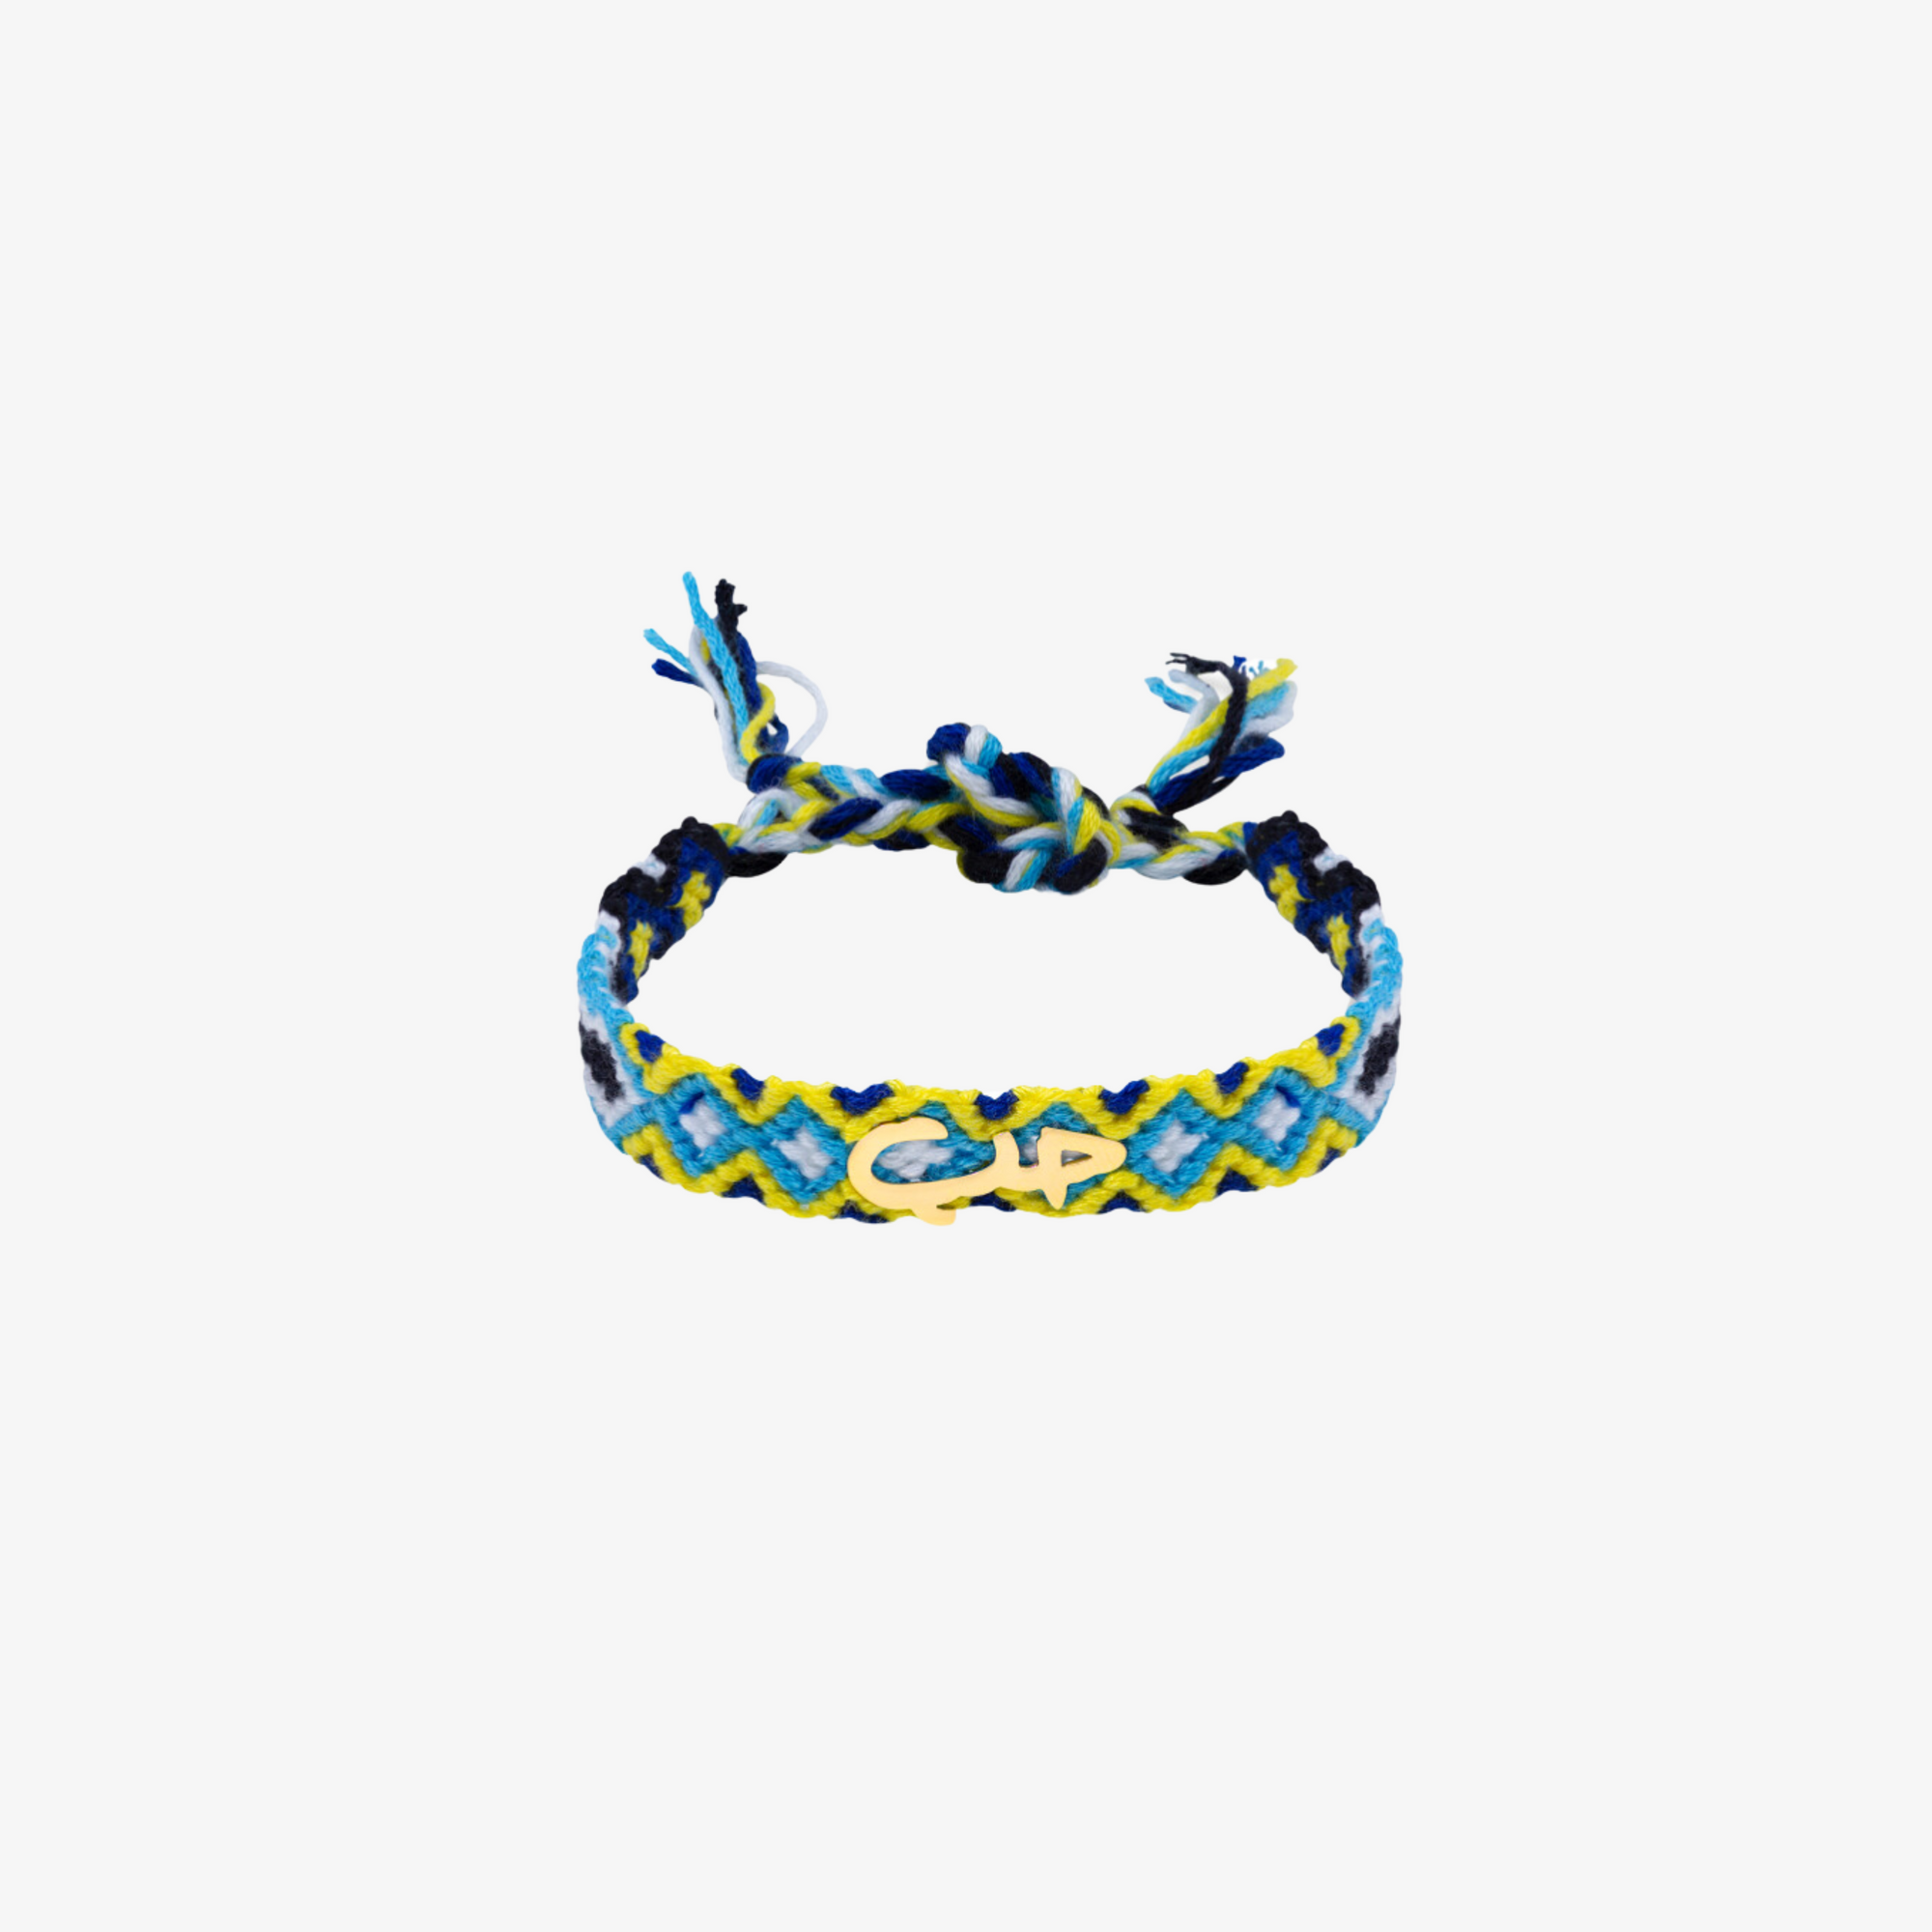 HOBB - Small "Love" Fabric Bracelet